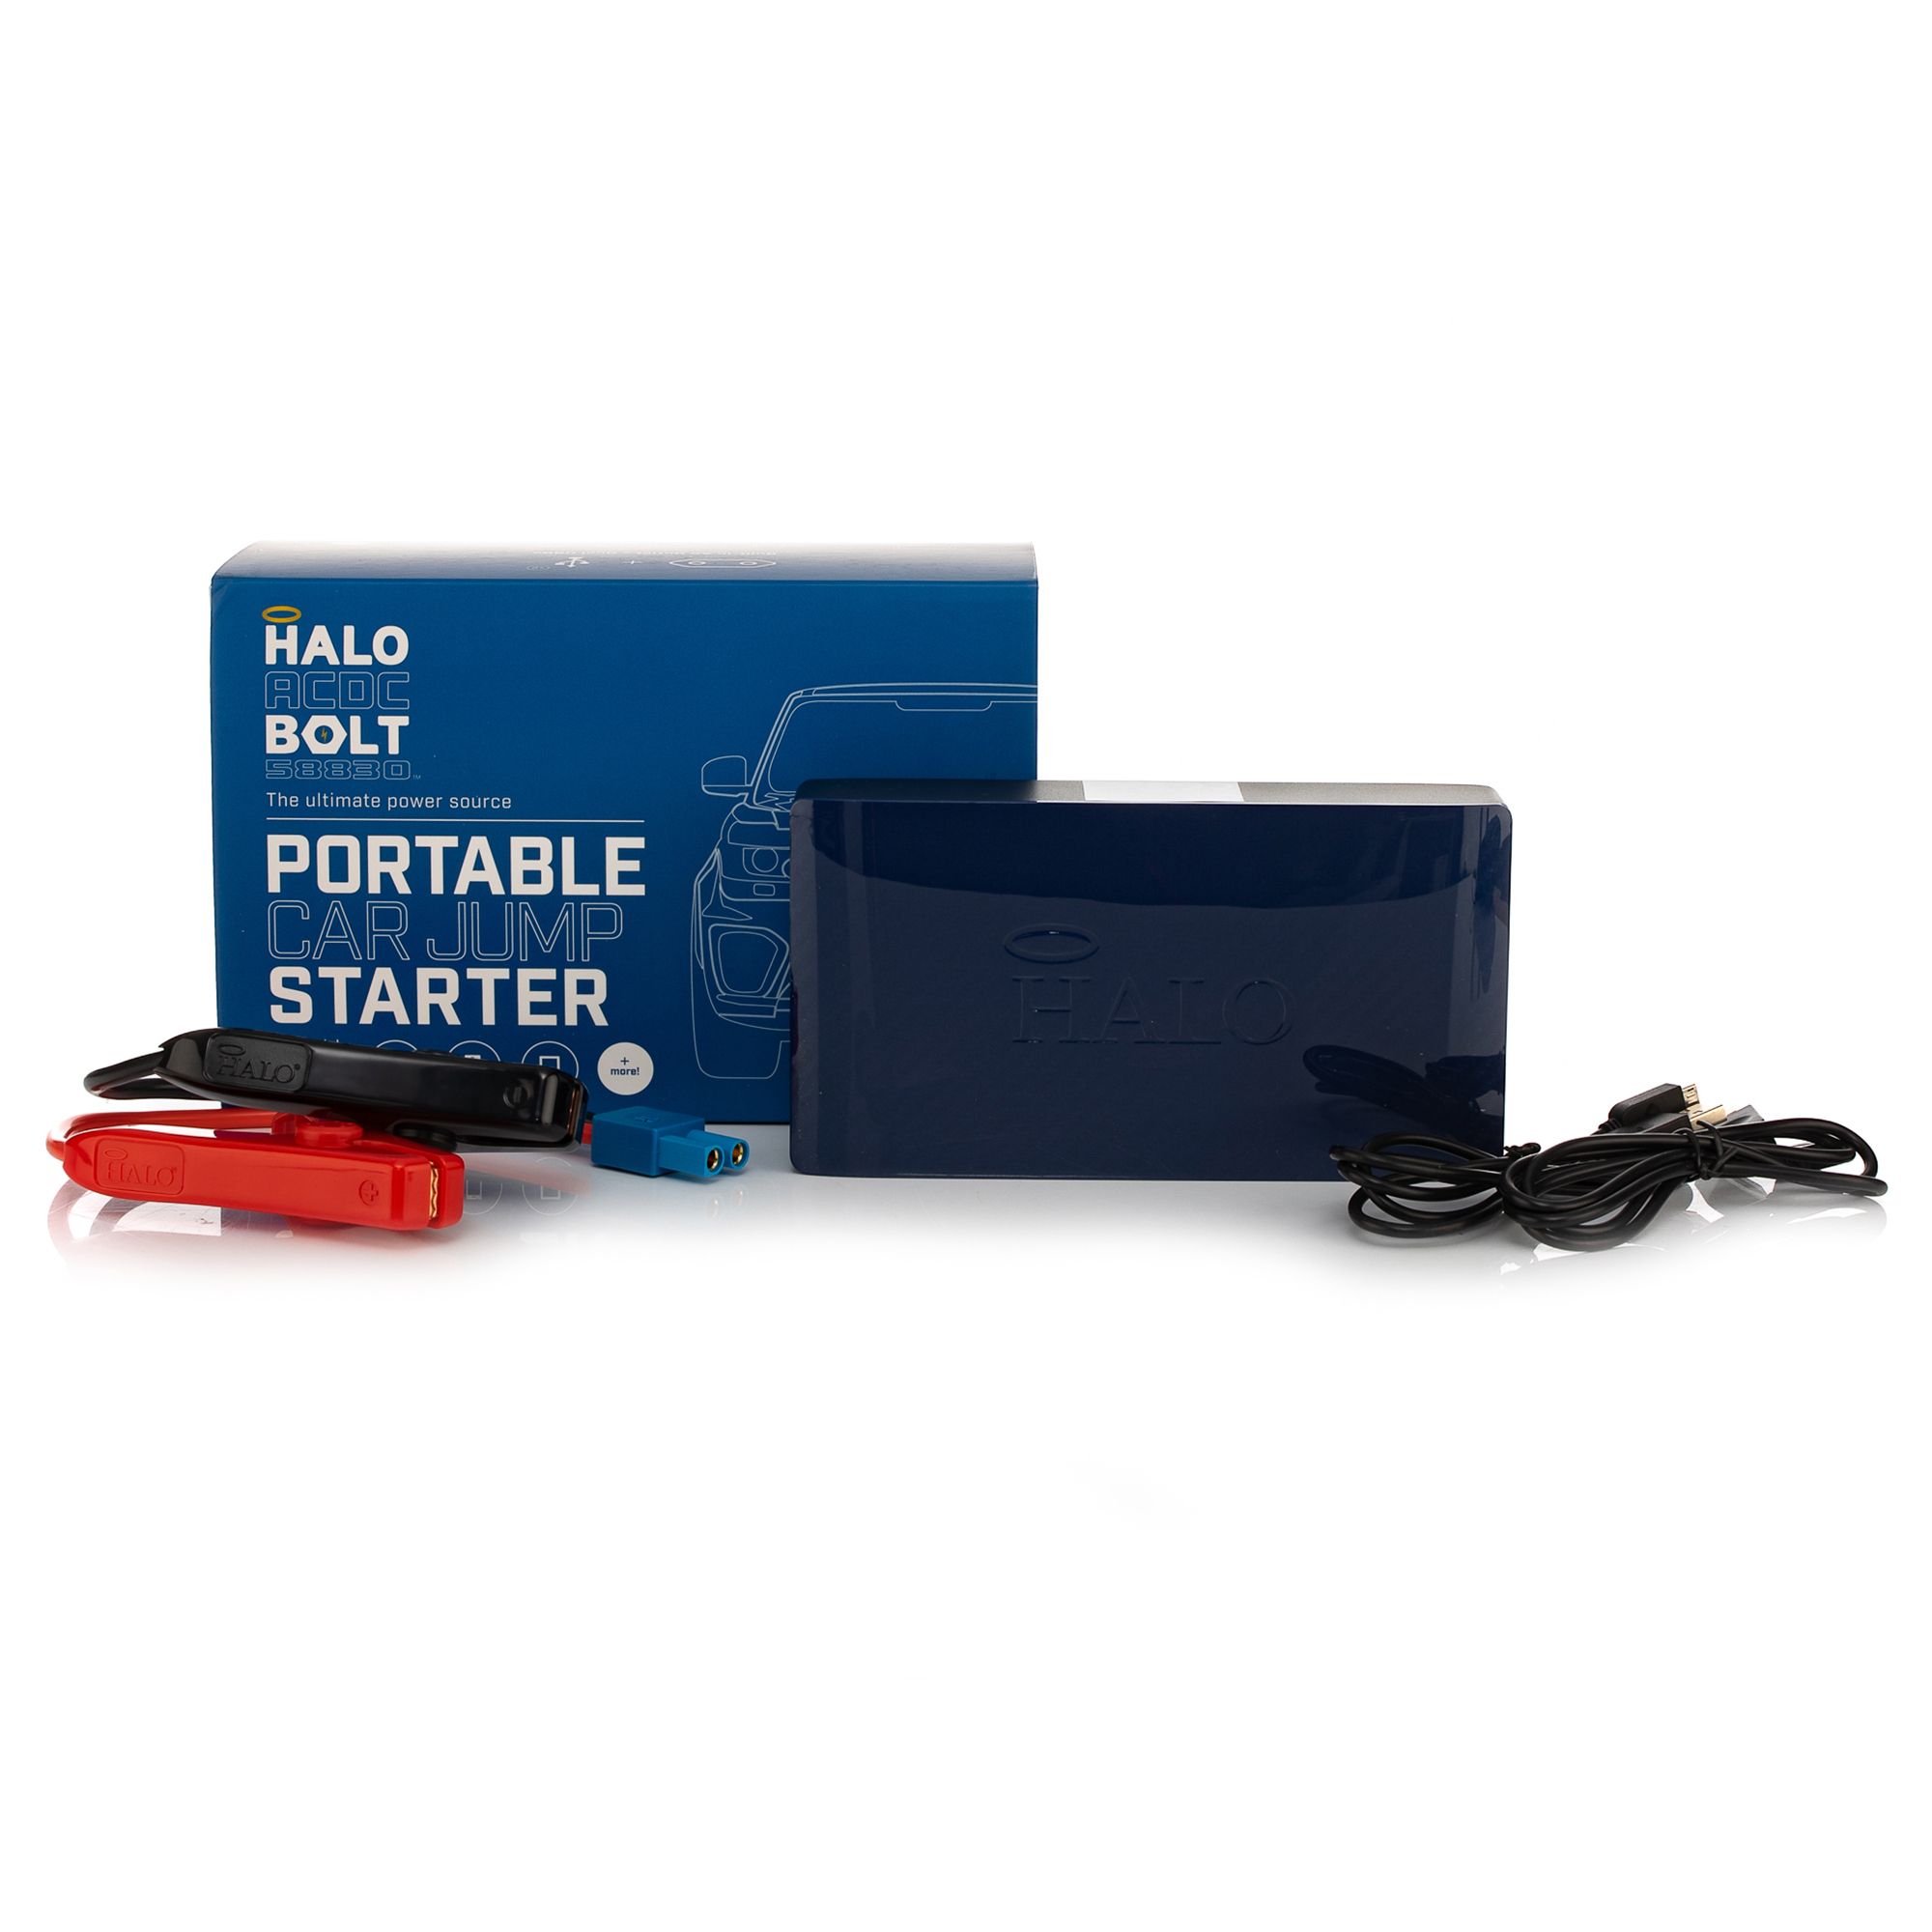 HALO BOLT AC/DC Notfall-Batterie für PKW & mobile Endgeräte, 58.830mWh  Steckdosenvorrichtung 